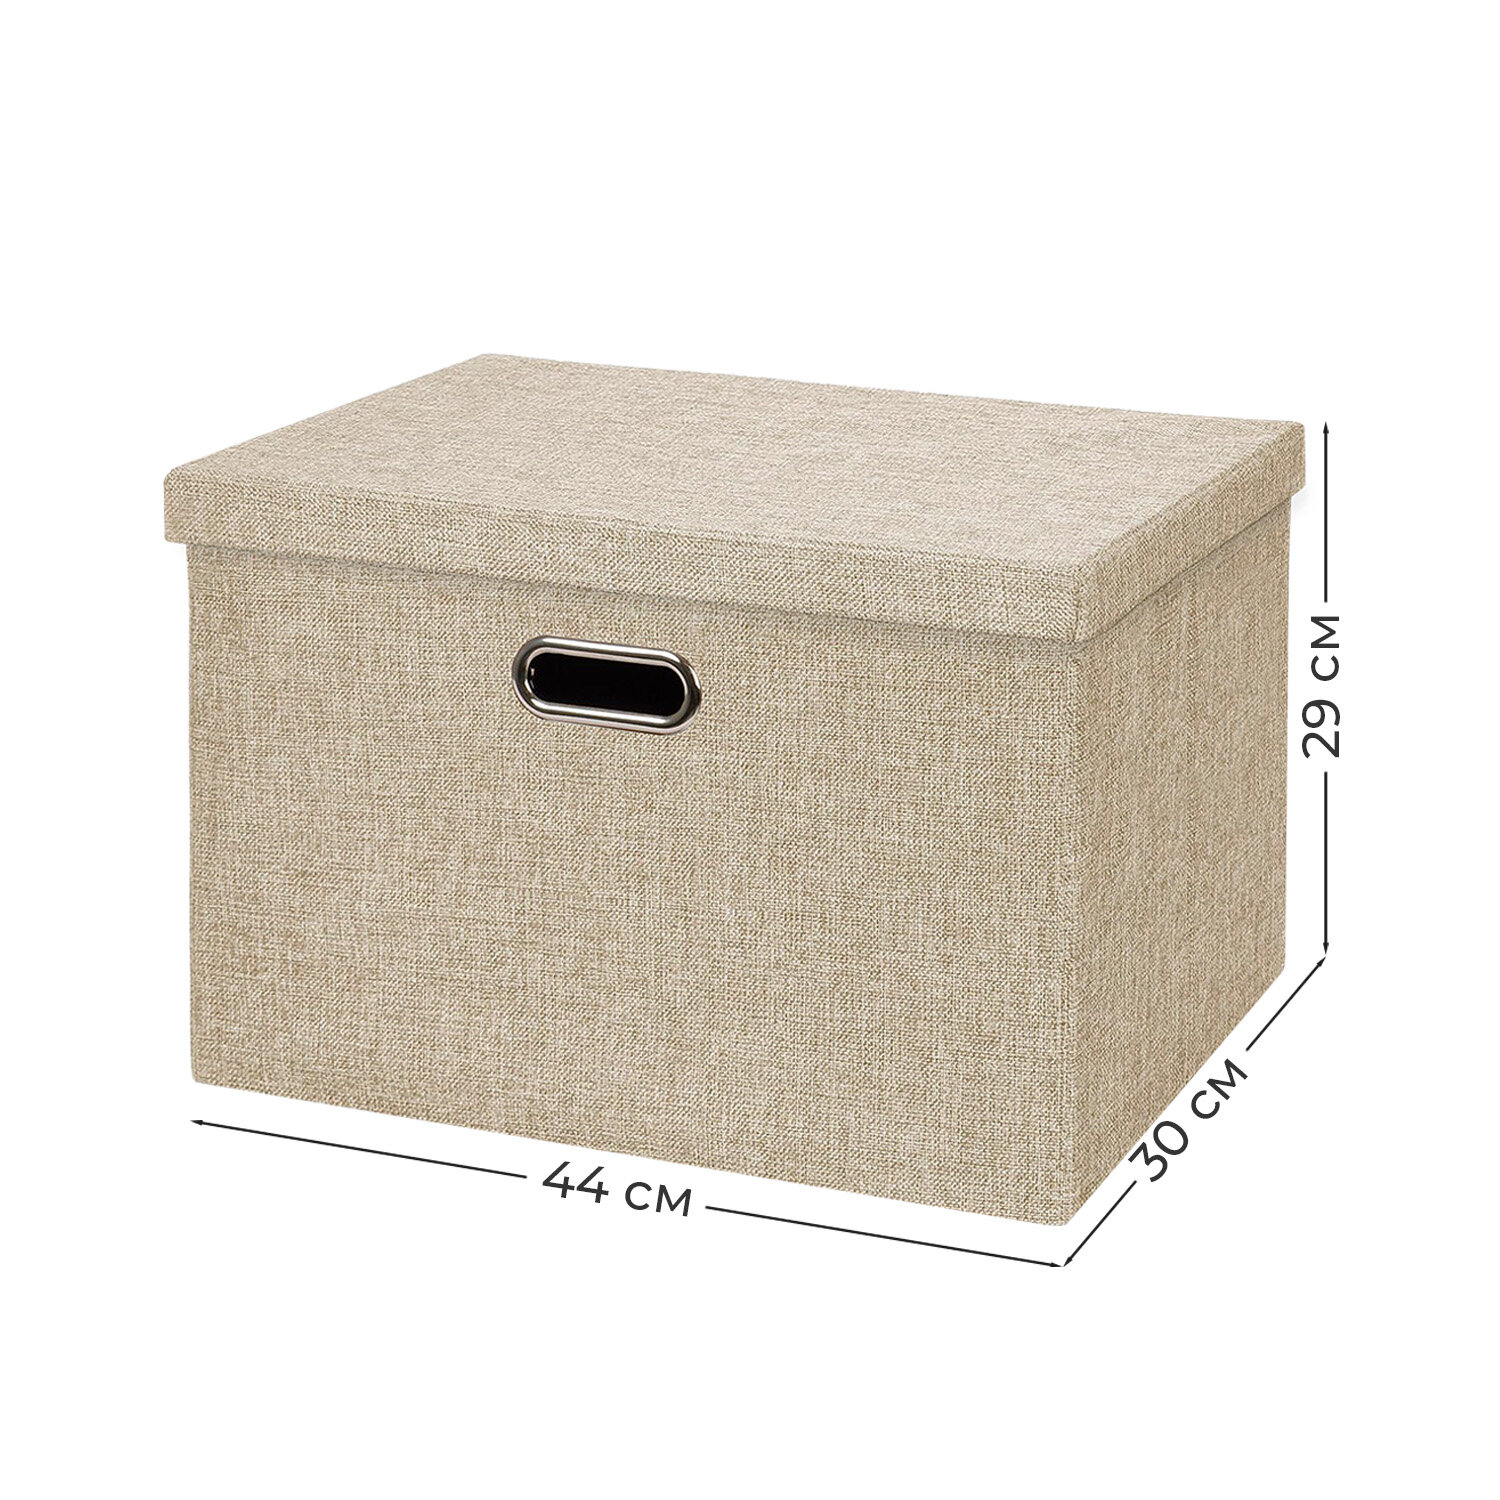 Коробка для хранения вещей, короб для хранения стеллажный, корзина, ящик, 44*30*29 см